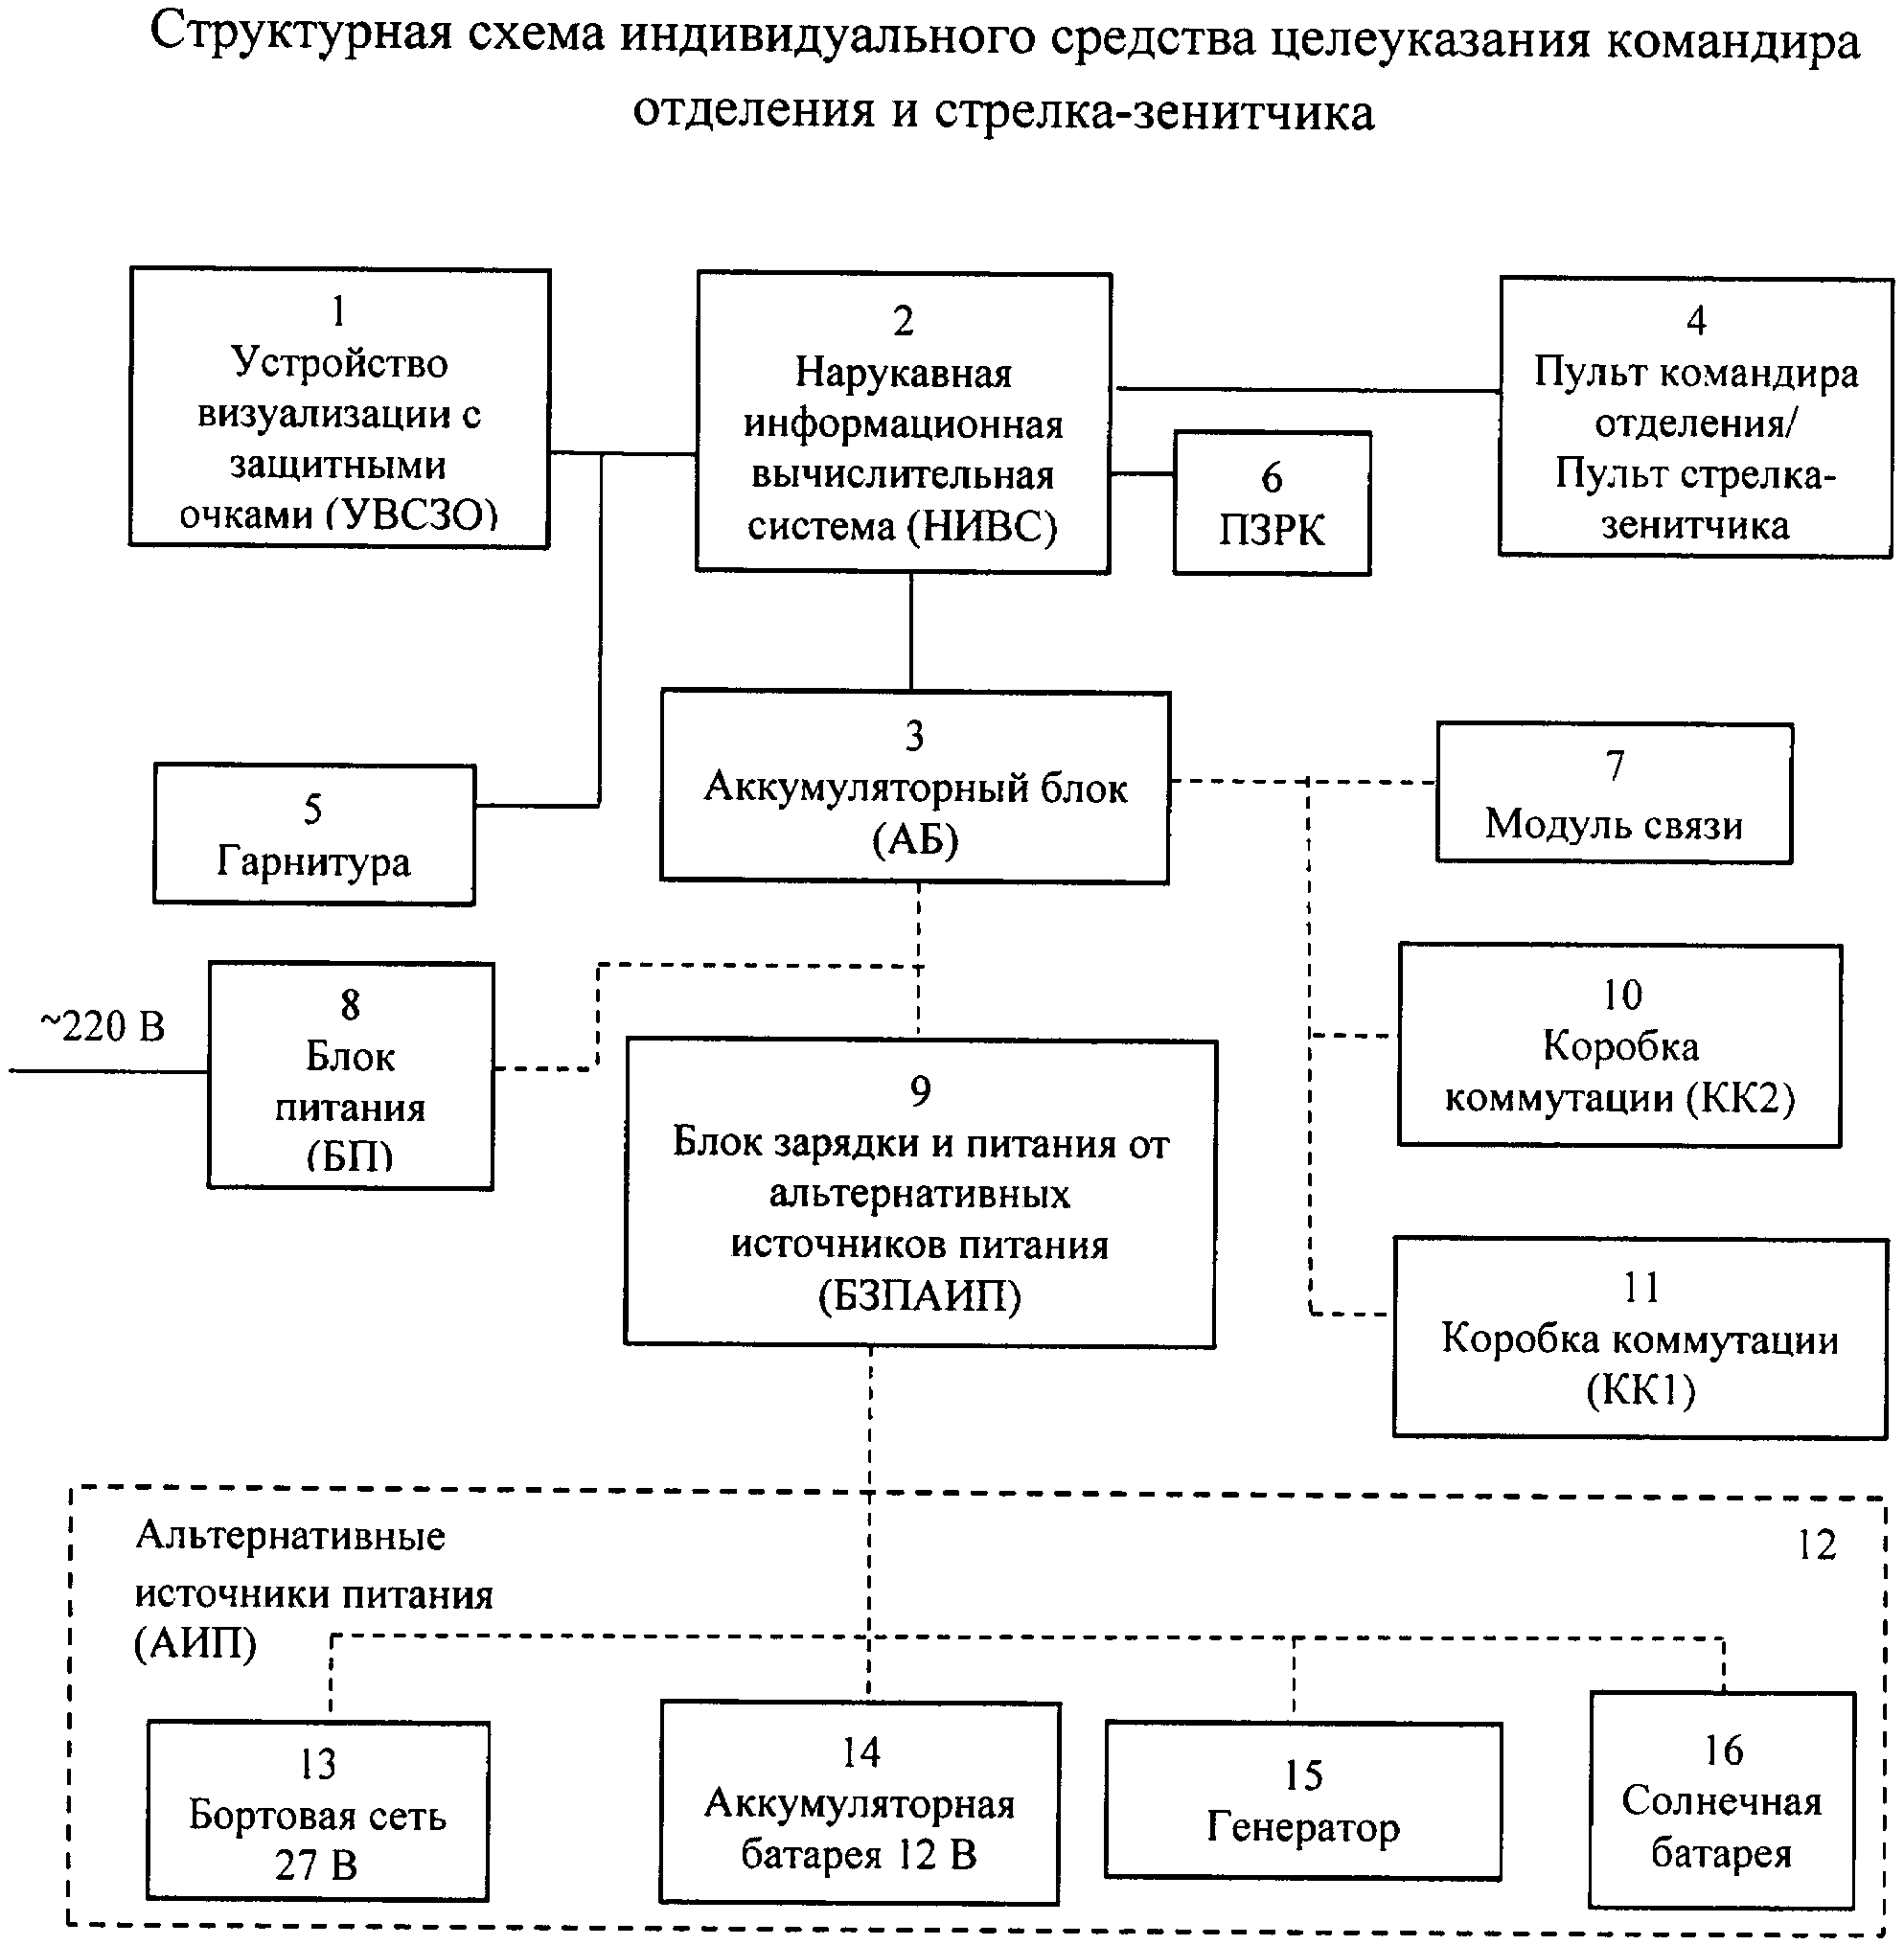 Структурная схема ПЗРК